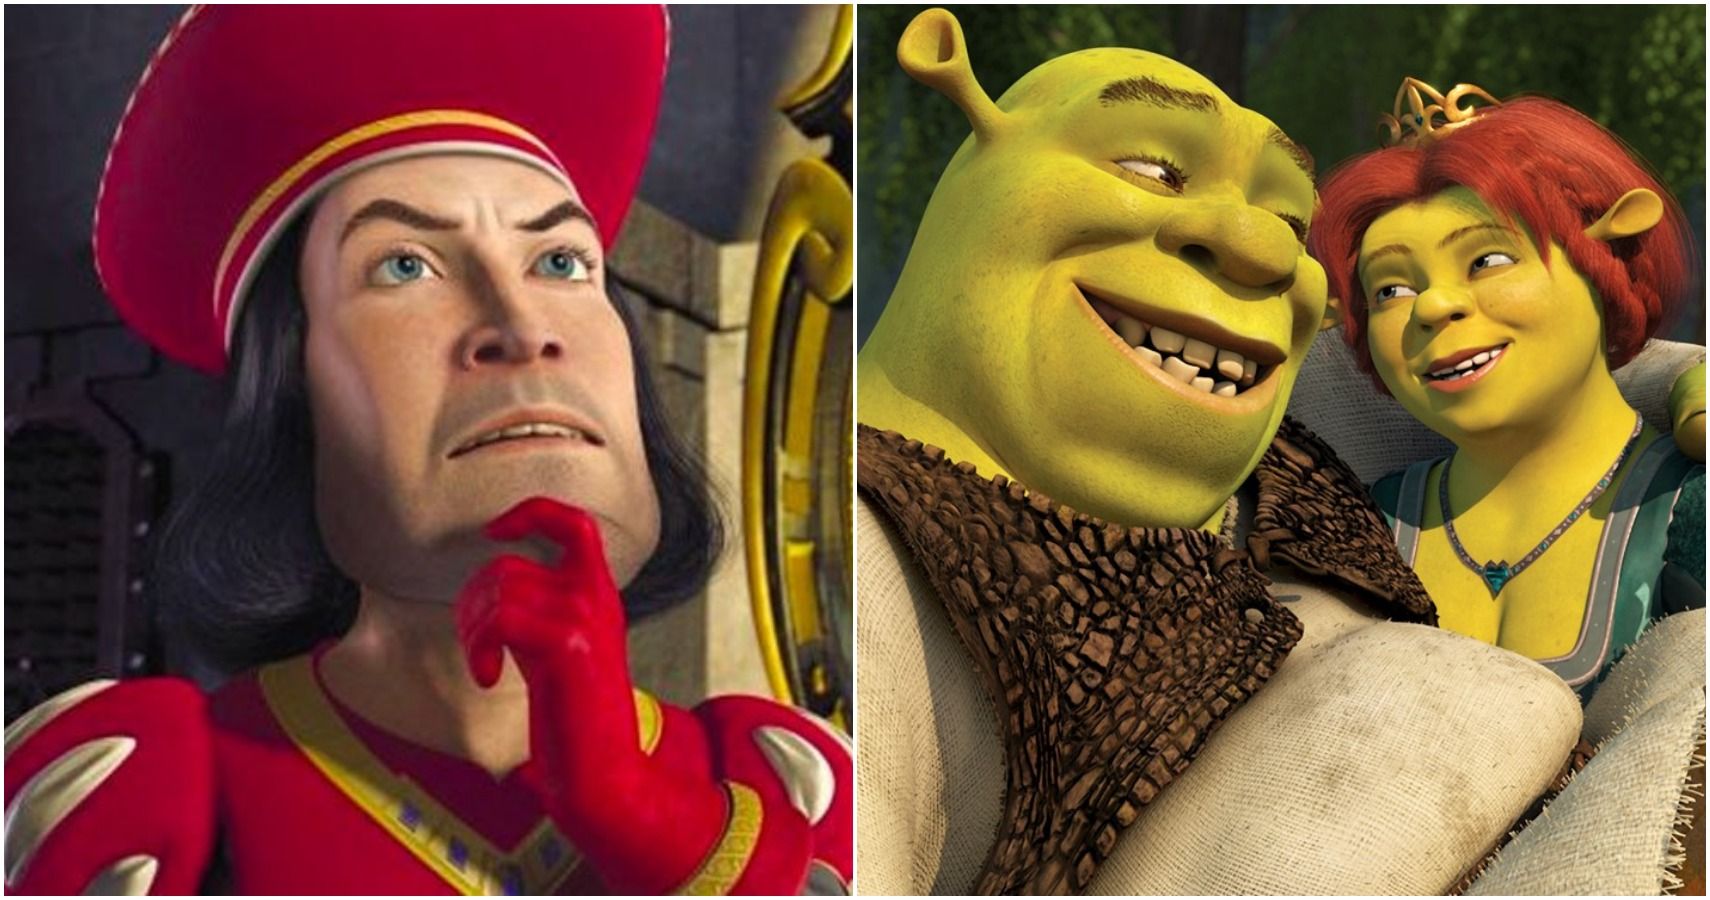 Shrek and Fiona  Explain a film plot badly, Shrek memes, Famous